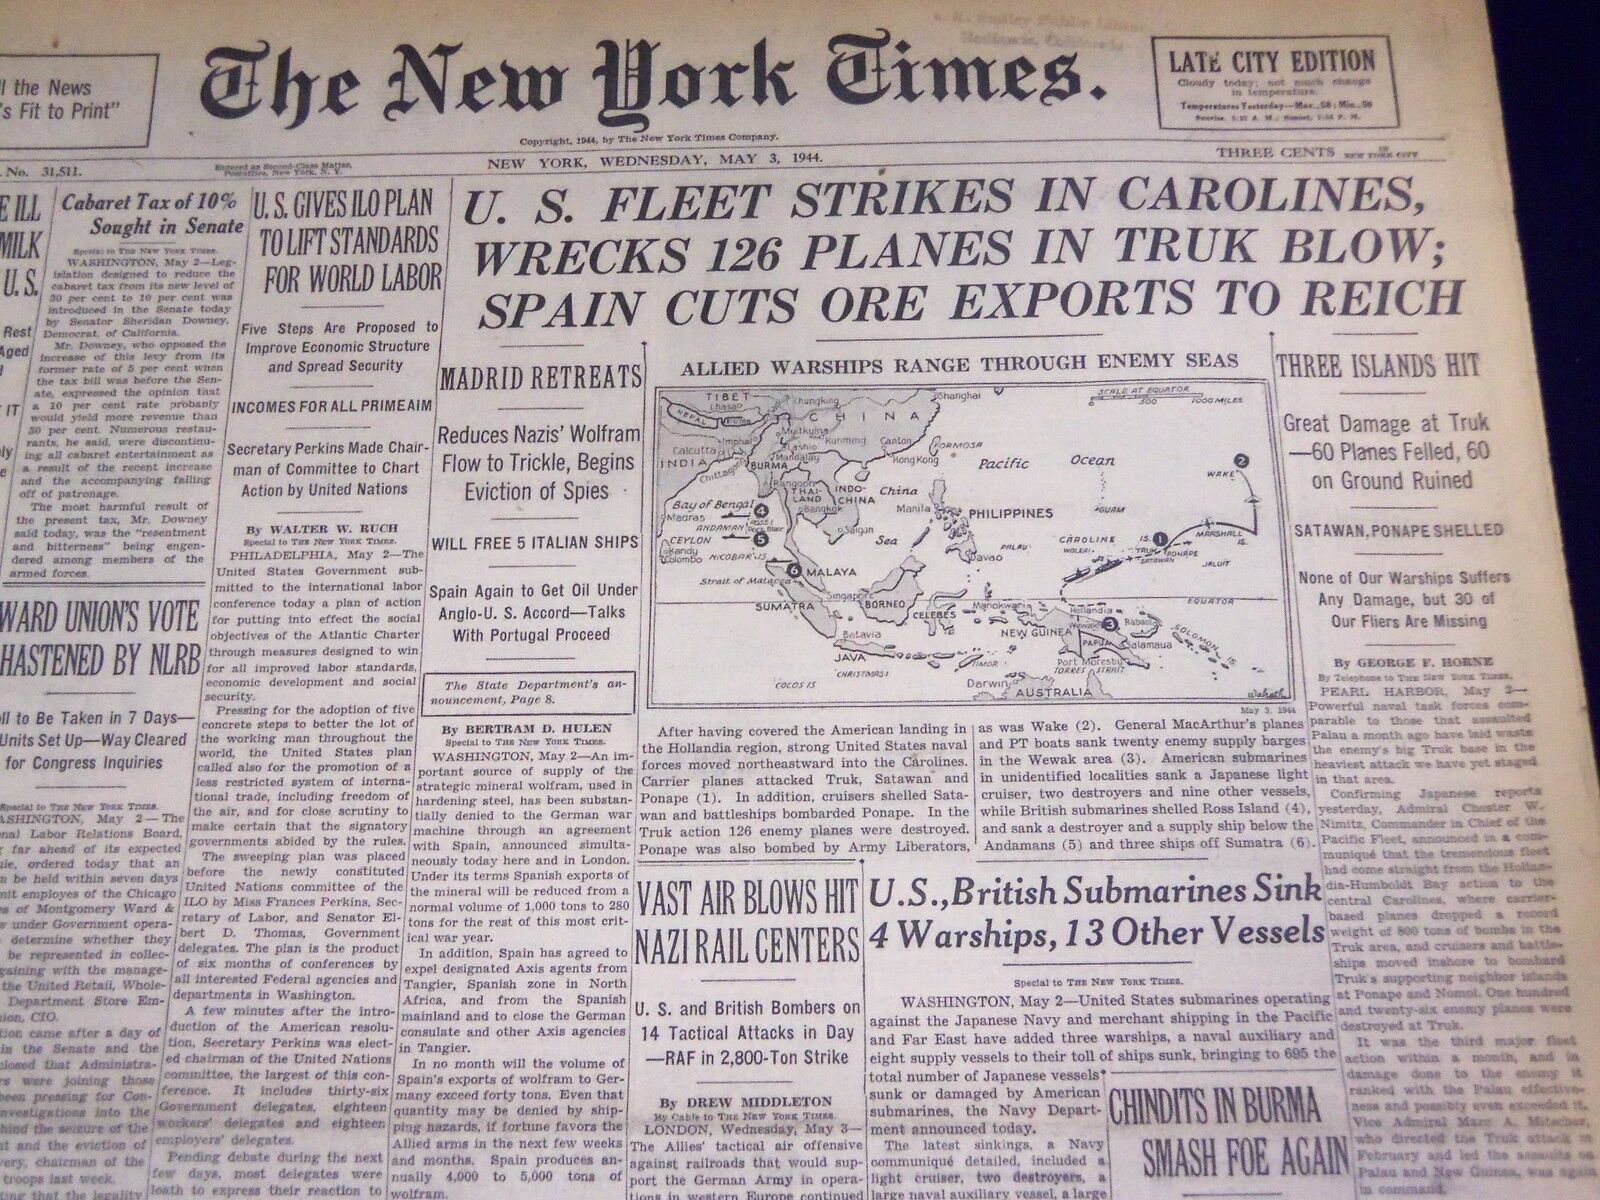 1944 MAY 3 NEW YORK TIMES - U. S. FLEET WRECKS 126 PLANES IN TRUK BLOW - NT 1730